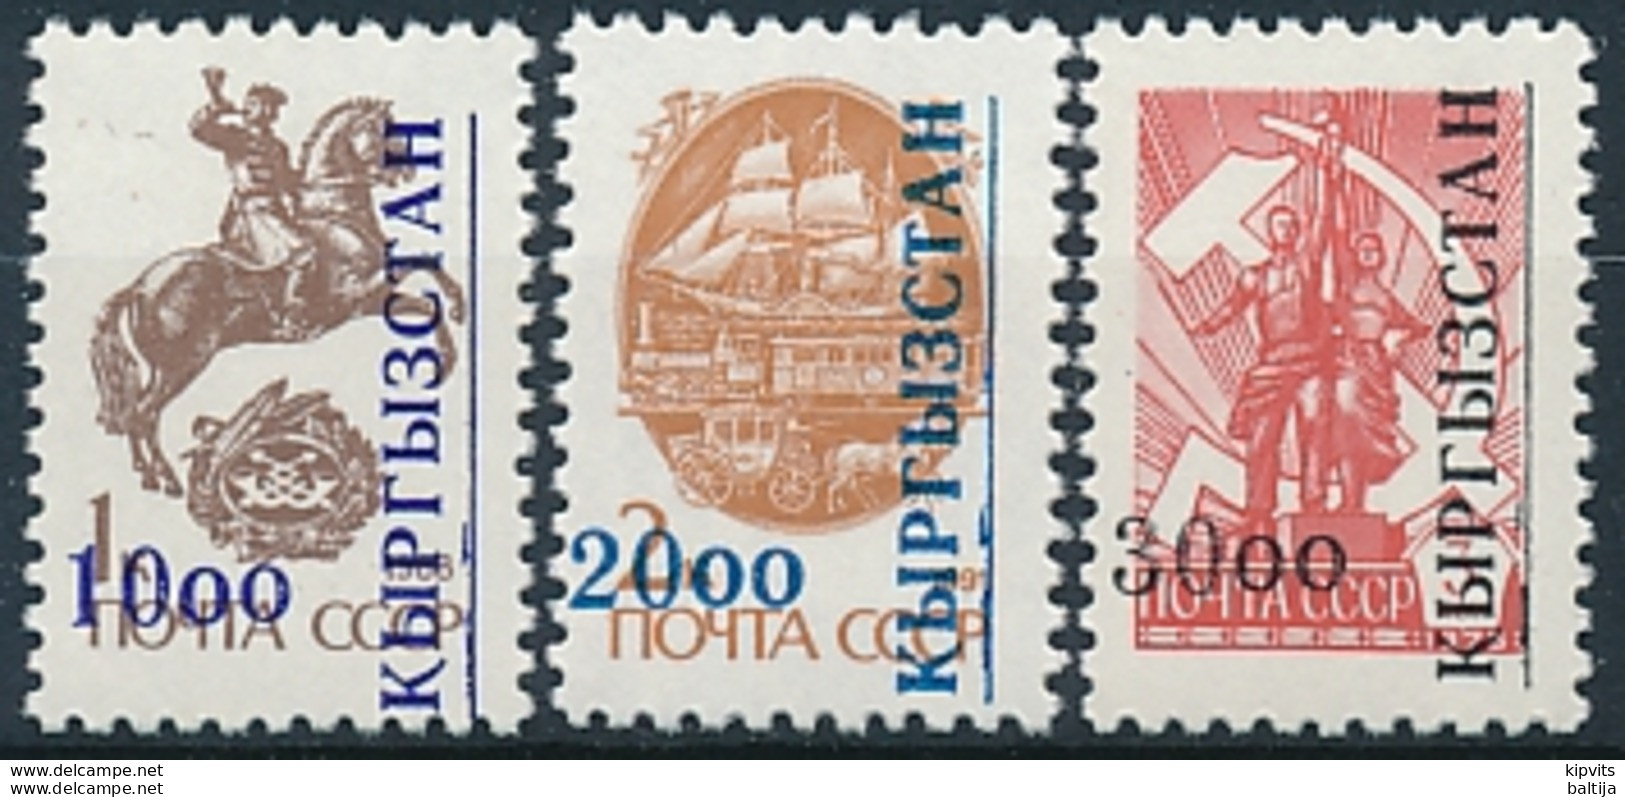 Mi 13-15 ** MNH Definitives Overprint Surcharge Soviet Postage Stamps - Kyrgyzstan